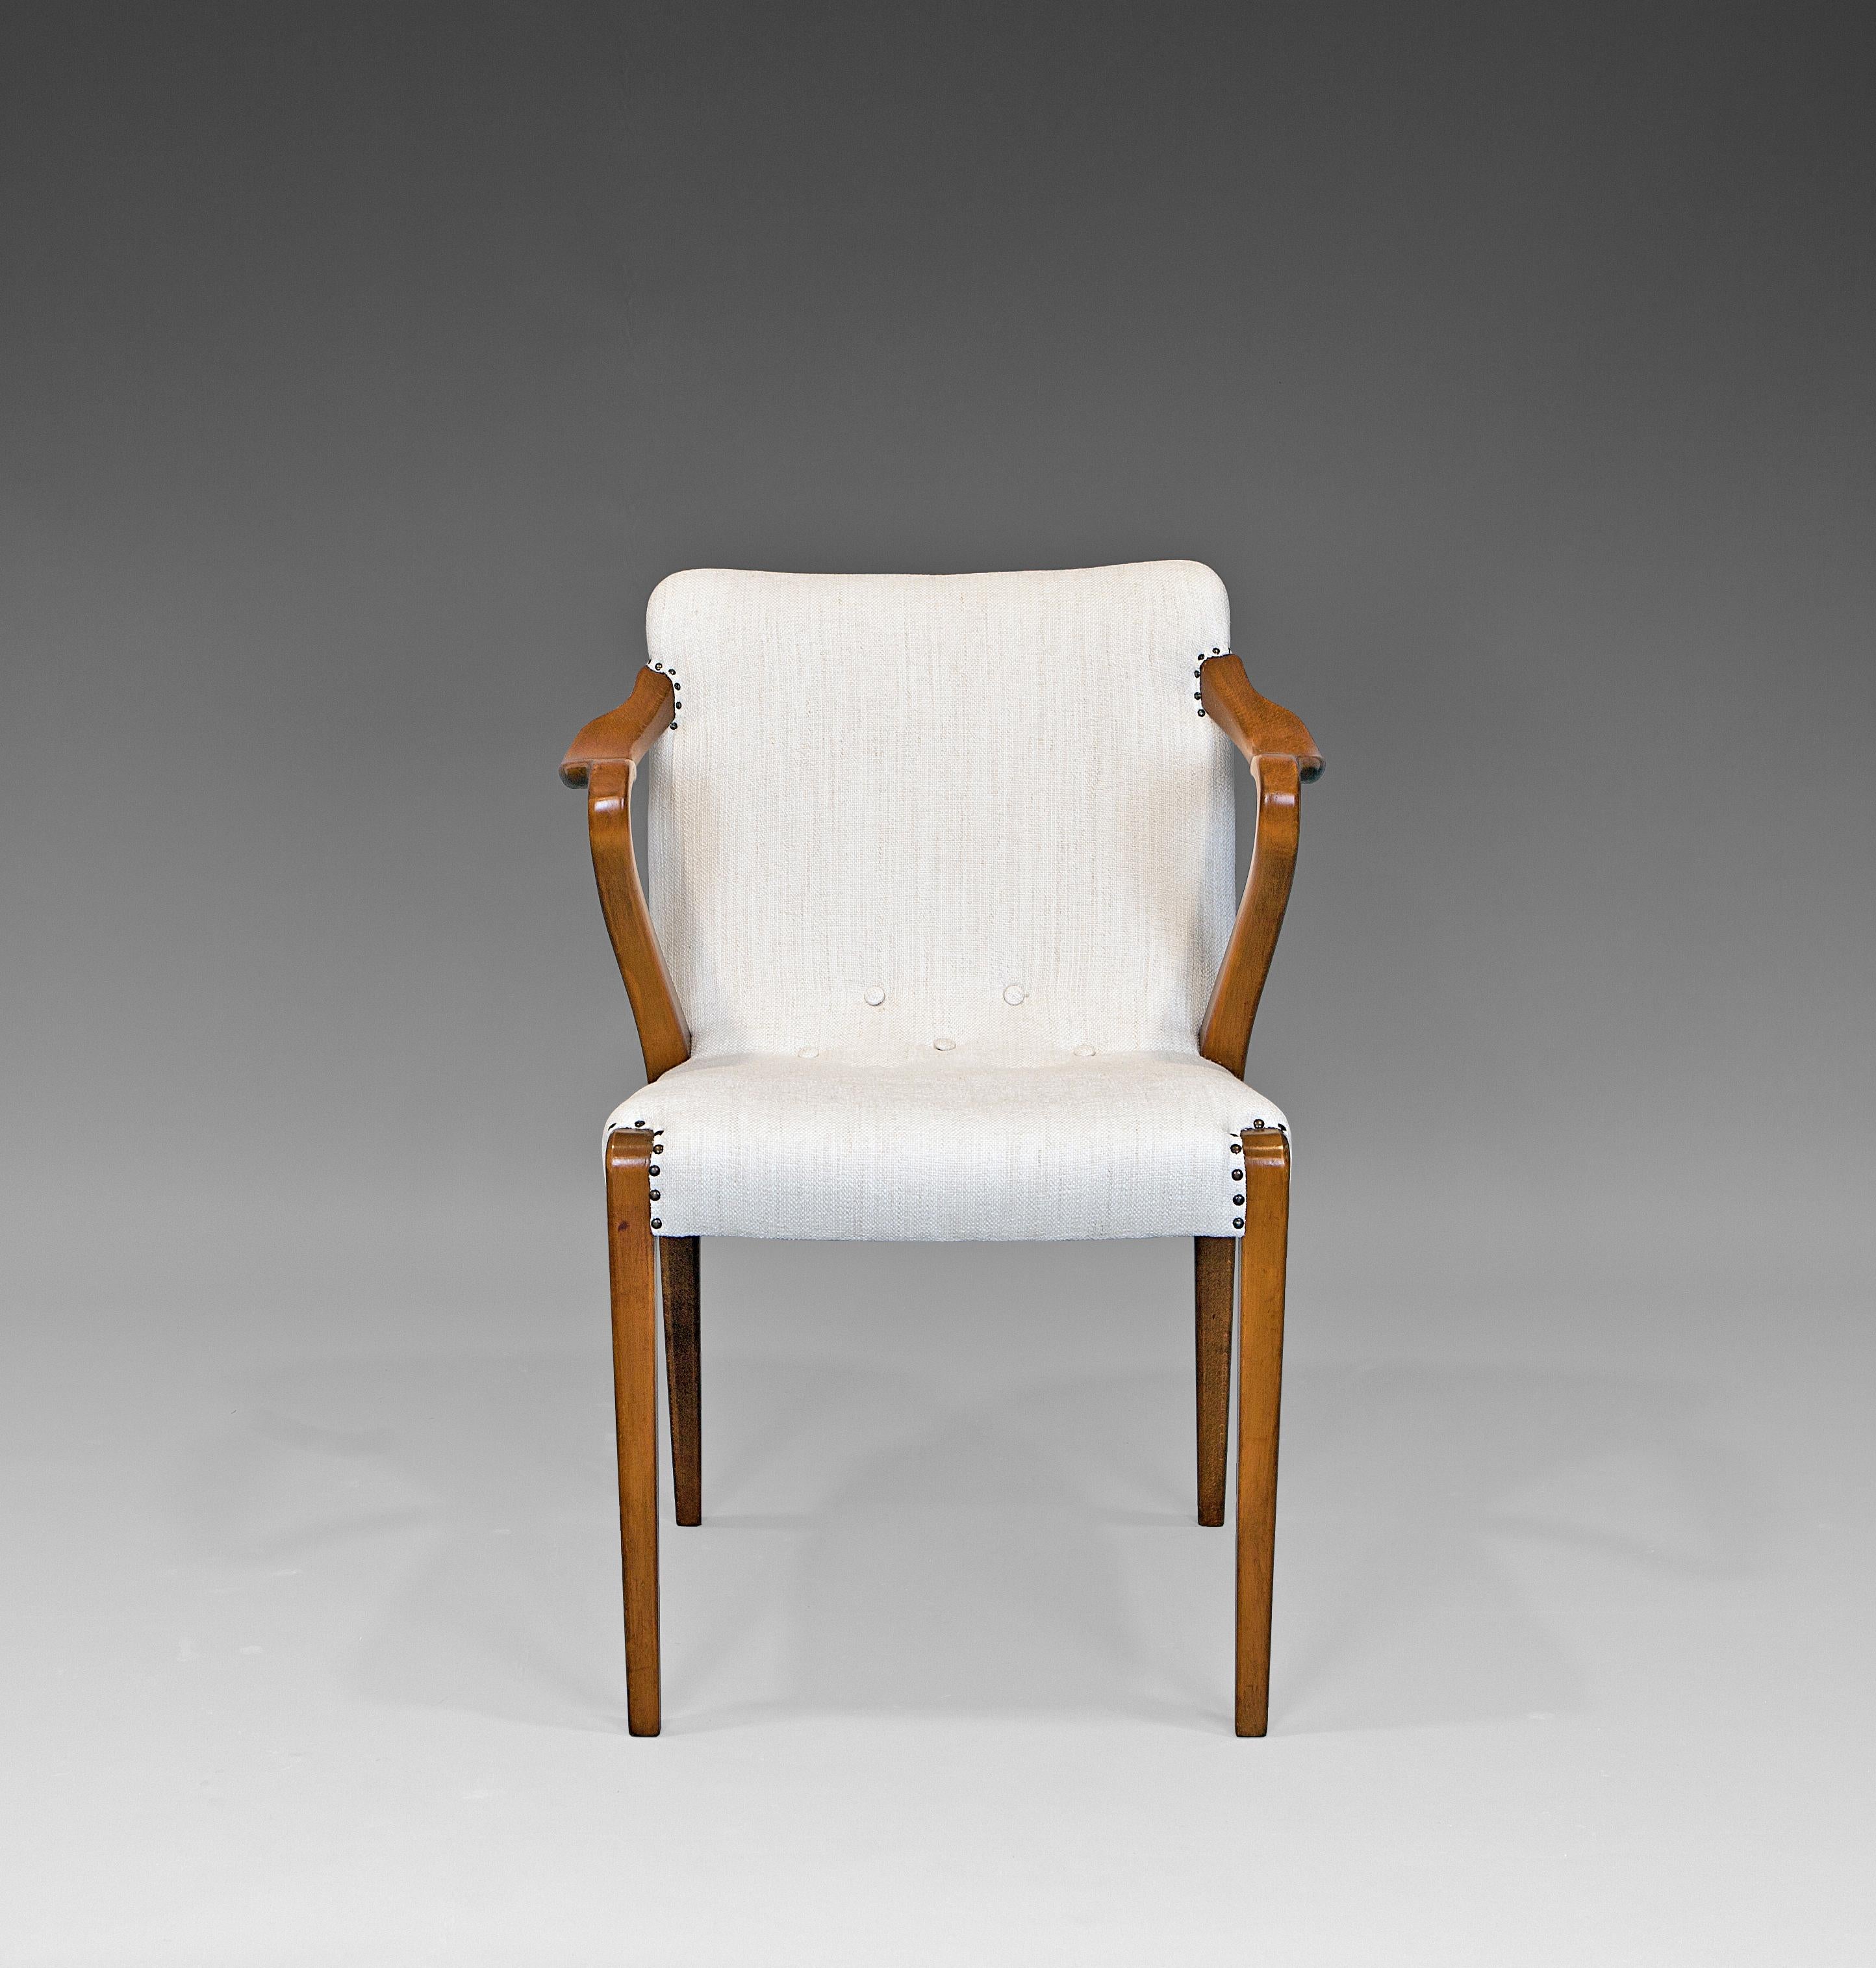 Swedish 1930s “1522” Axel Larsson Birch chair